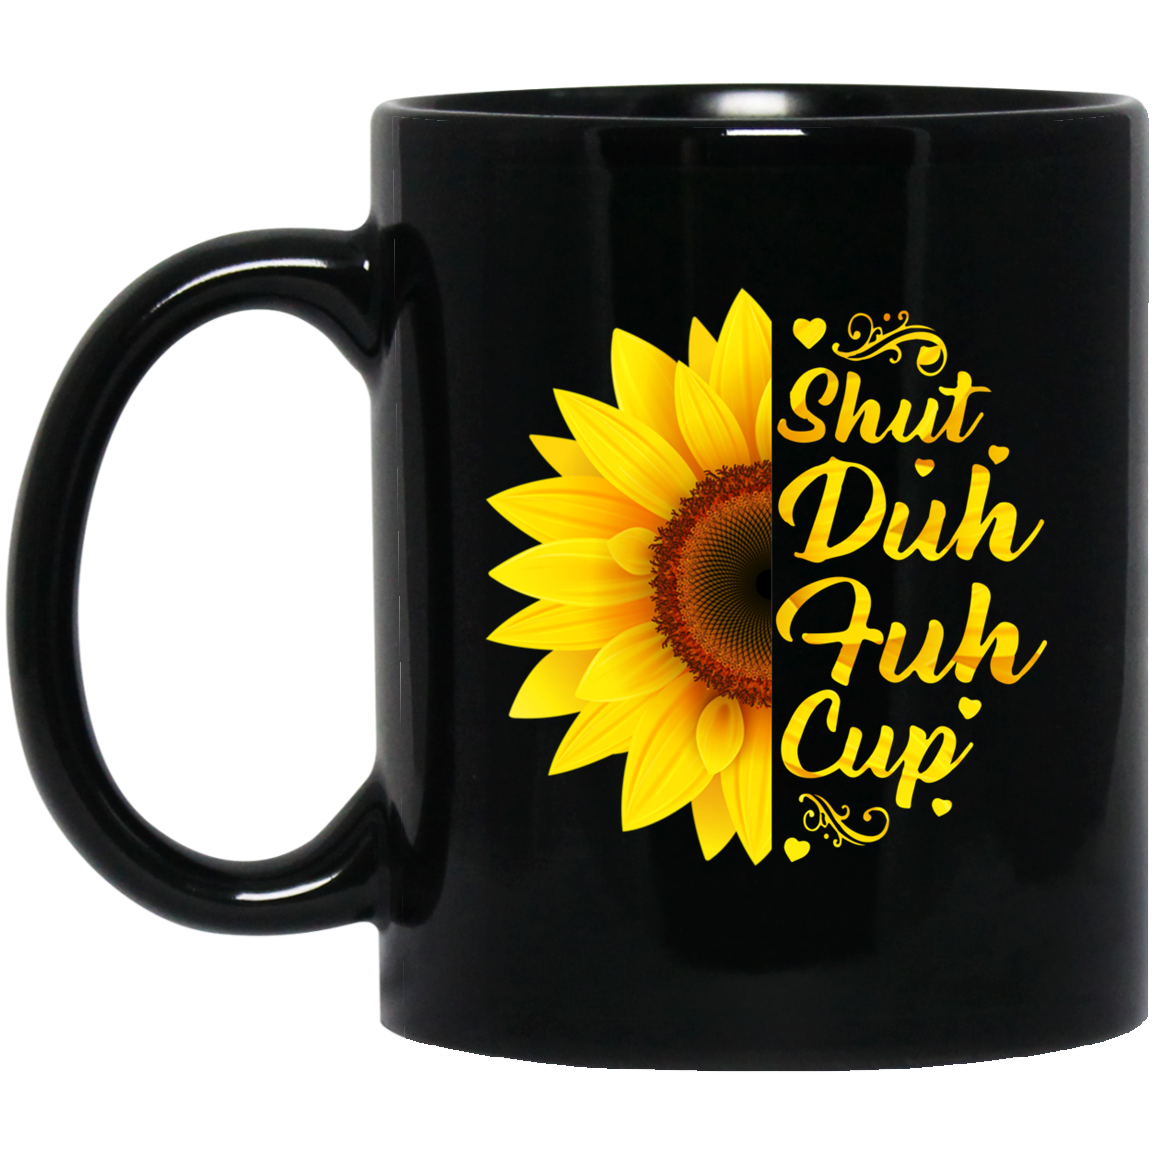 Sunflower Shut duh fuh cup mug